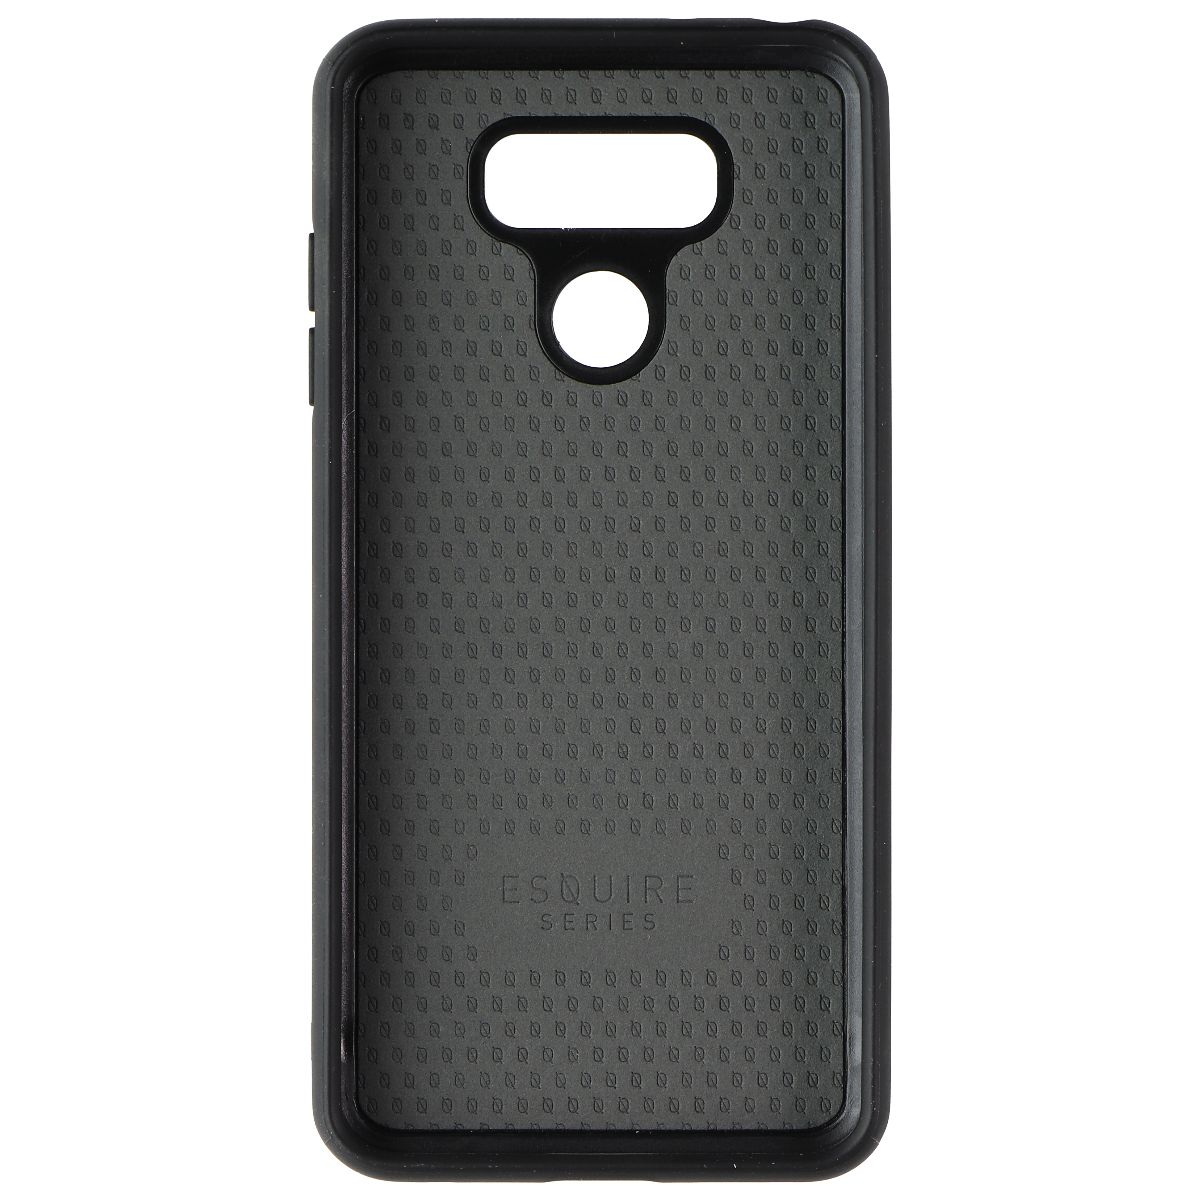 Incipio Esquire Series Fabric Case for LG G6 Smartphones - Khaki / Black Cell Phone - Cases, Covers & Skins Incipio    - Simple Cell Bulk Wholesale Pricing - USA Seller